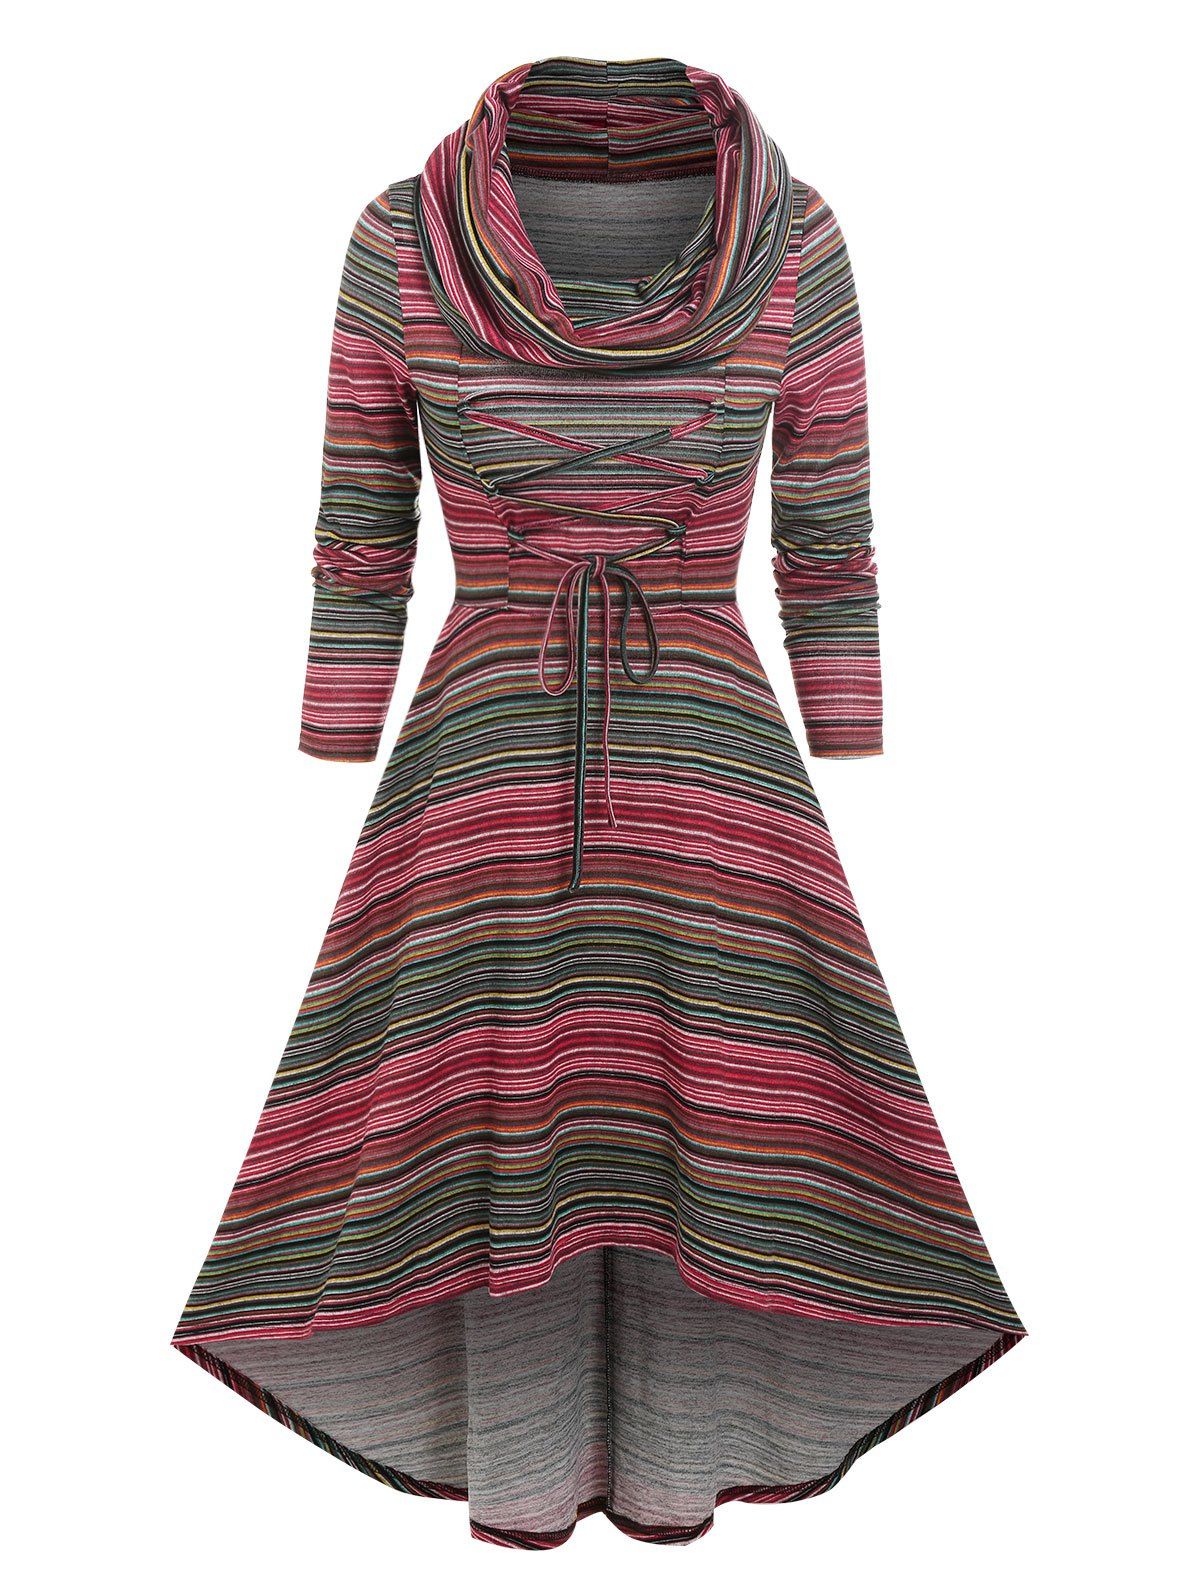 Lace Up Colorful Stripe Cowl Neck High Low Dress - multicolor M